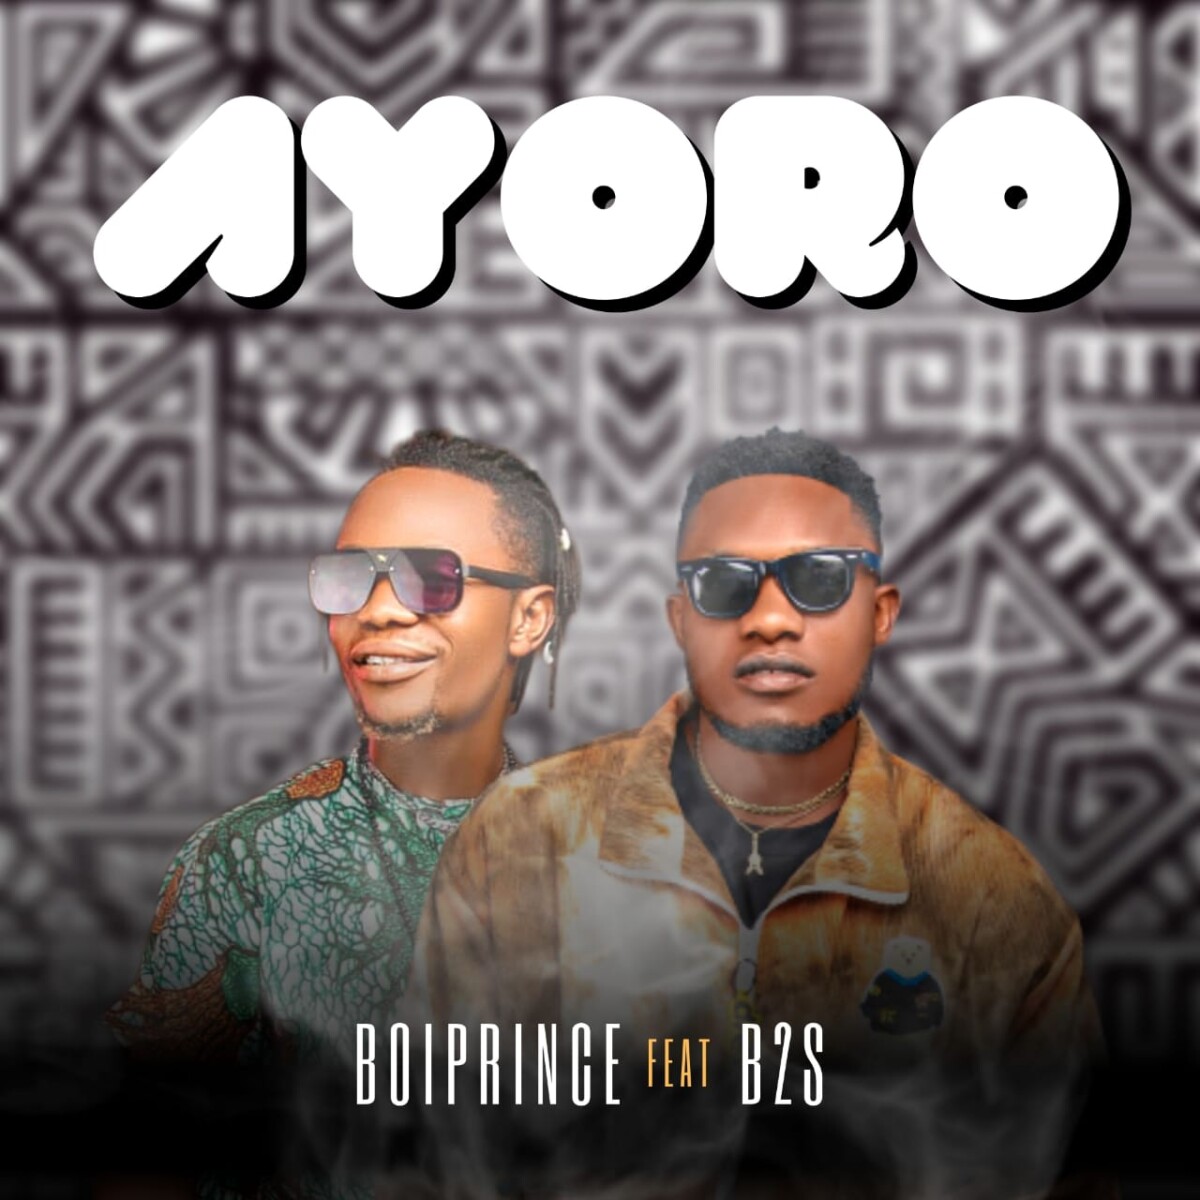 Boiprince -“Ayoro” Feat. B2S